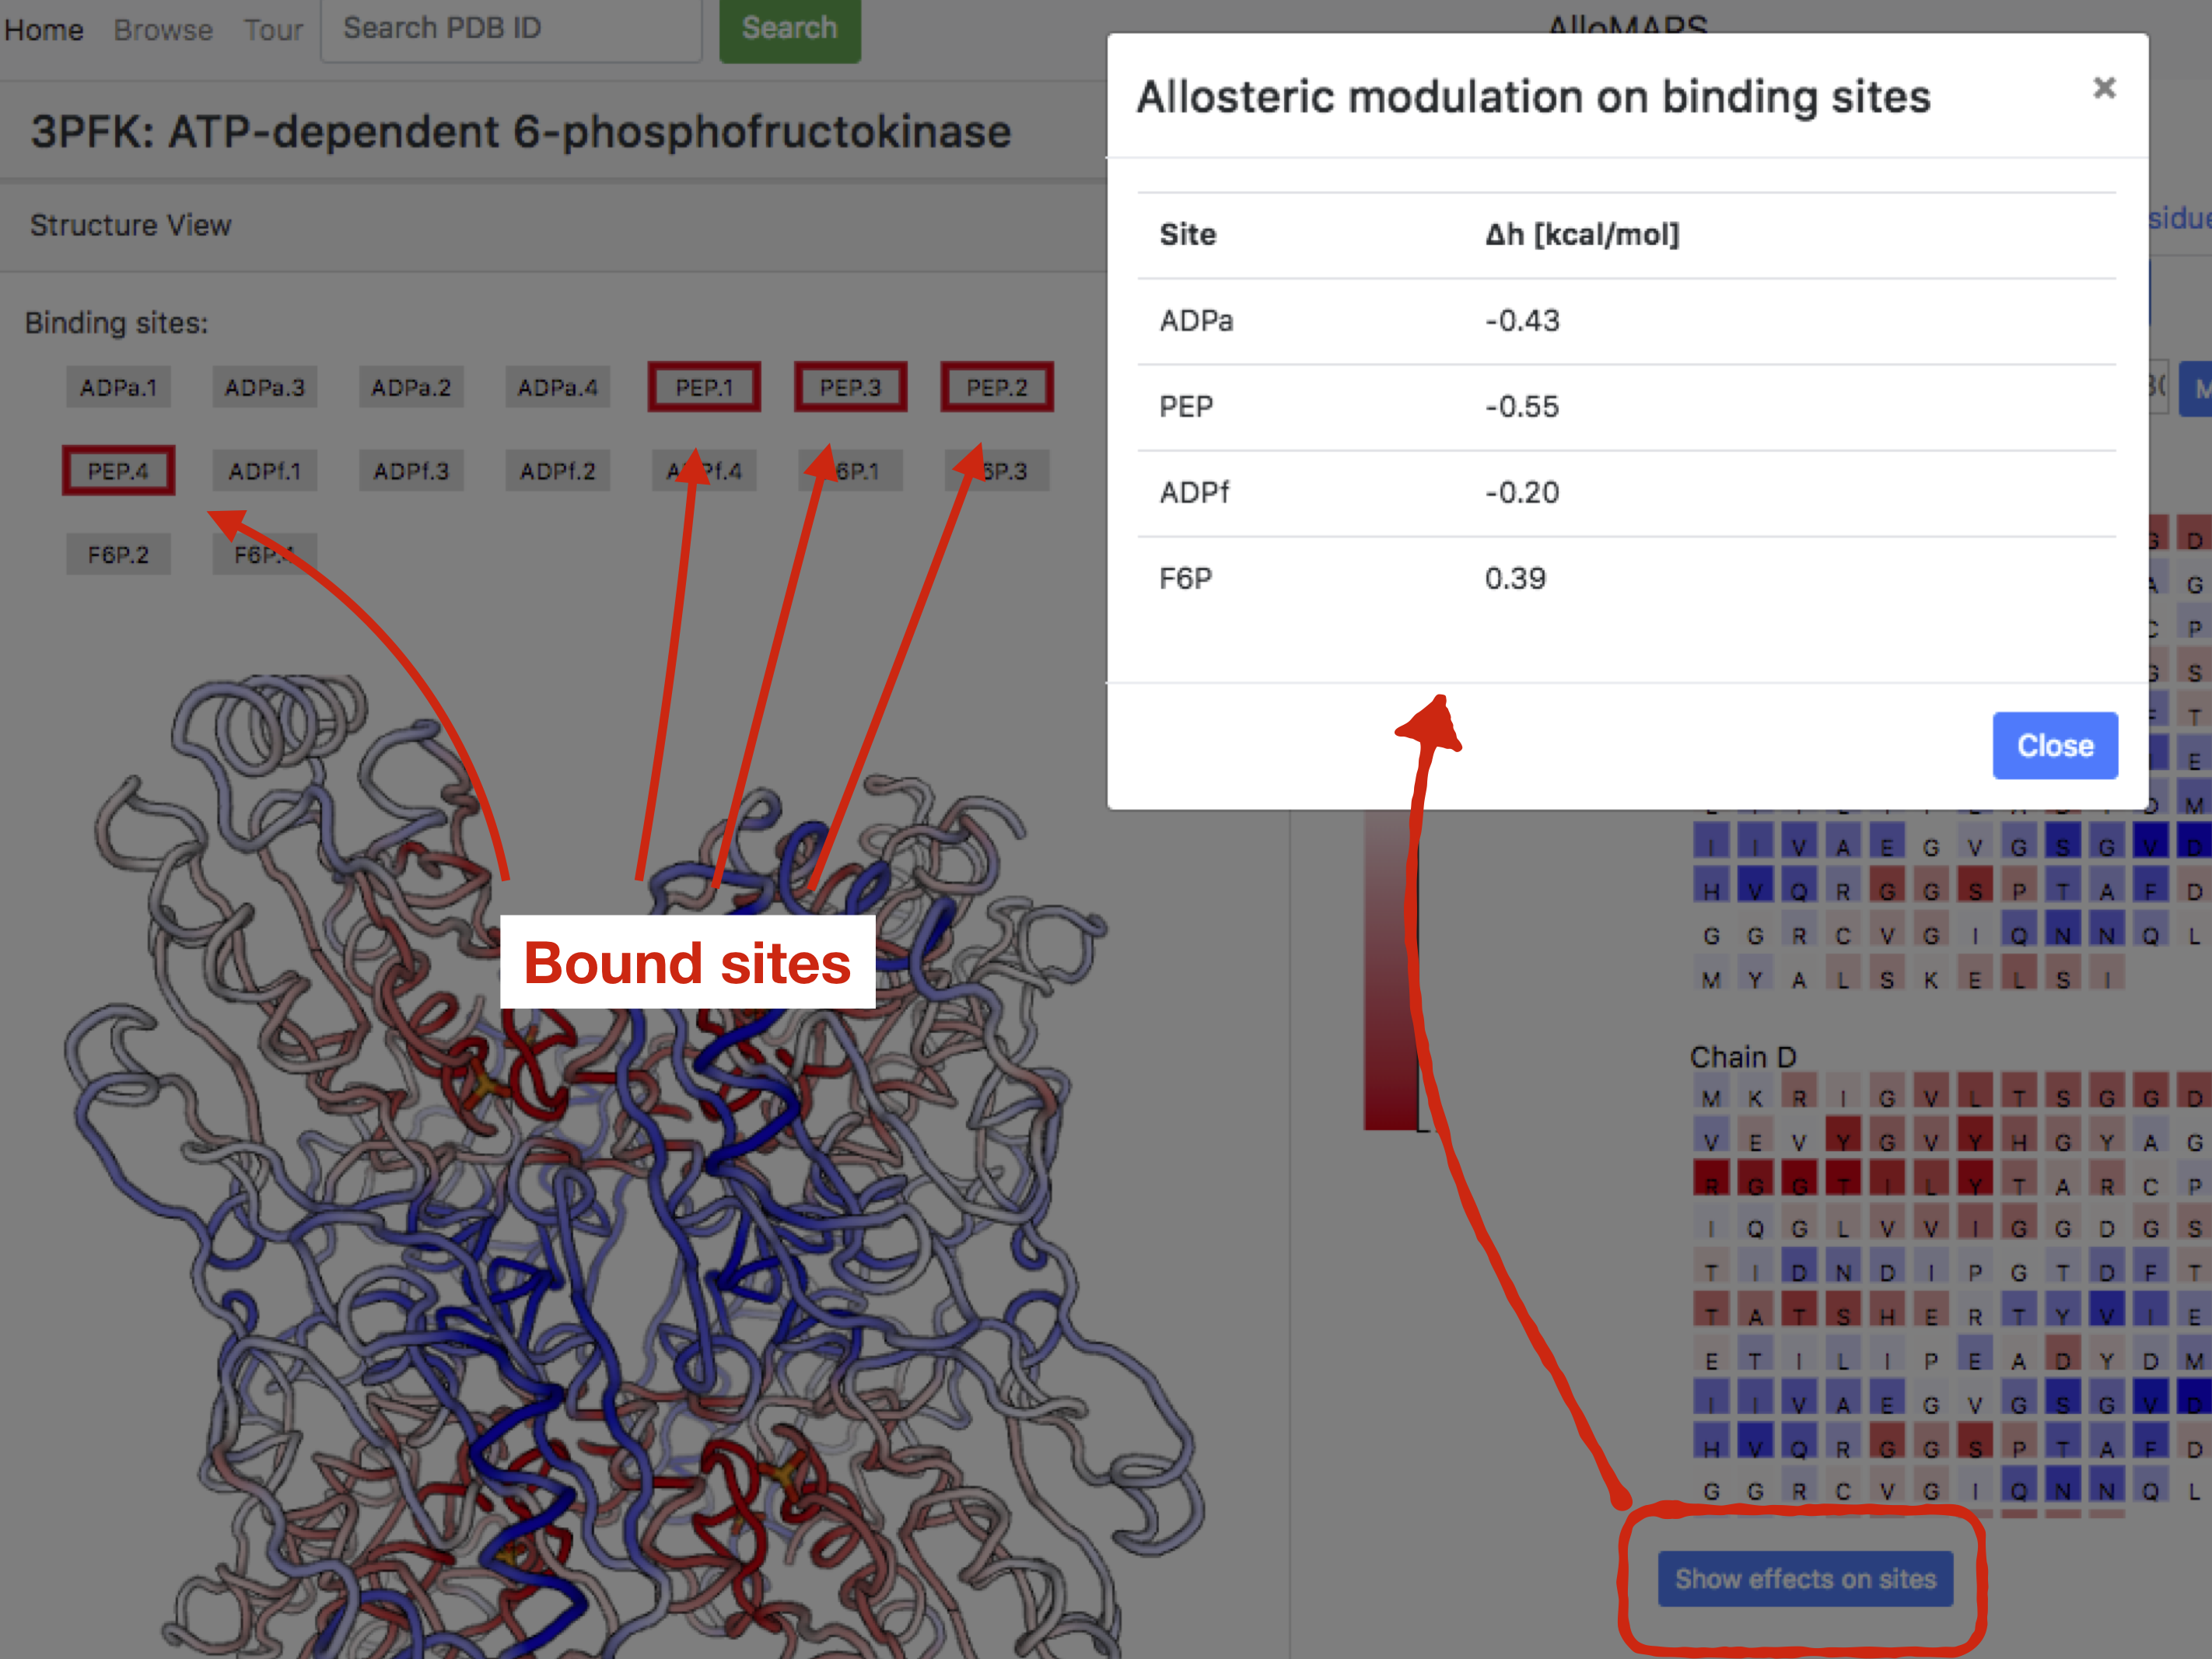 Modulation on binding sites